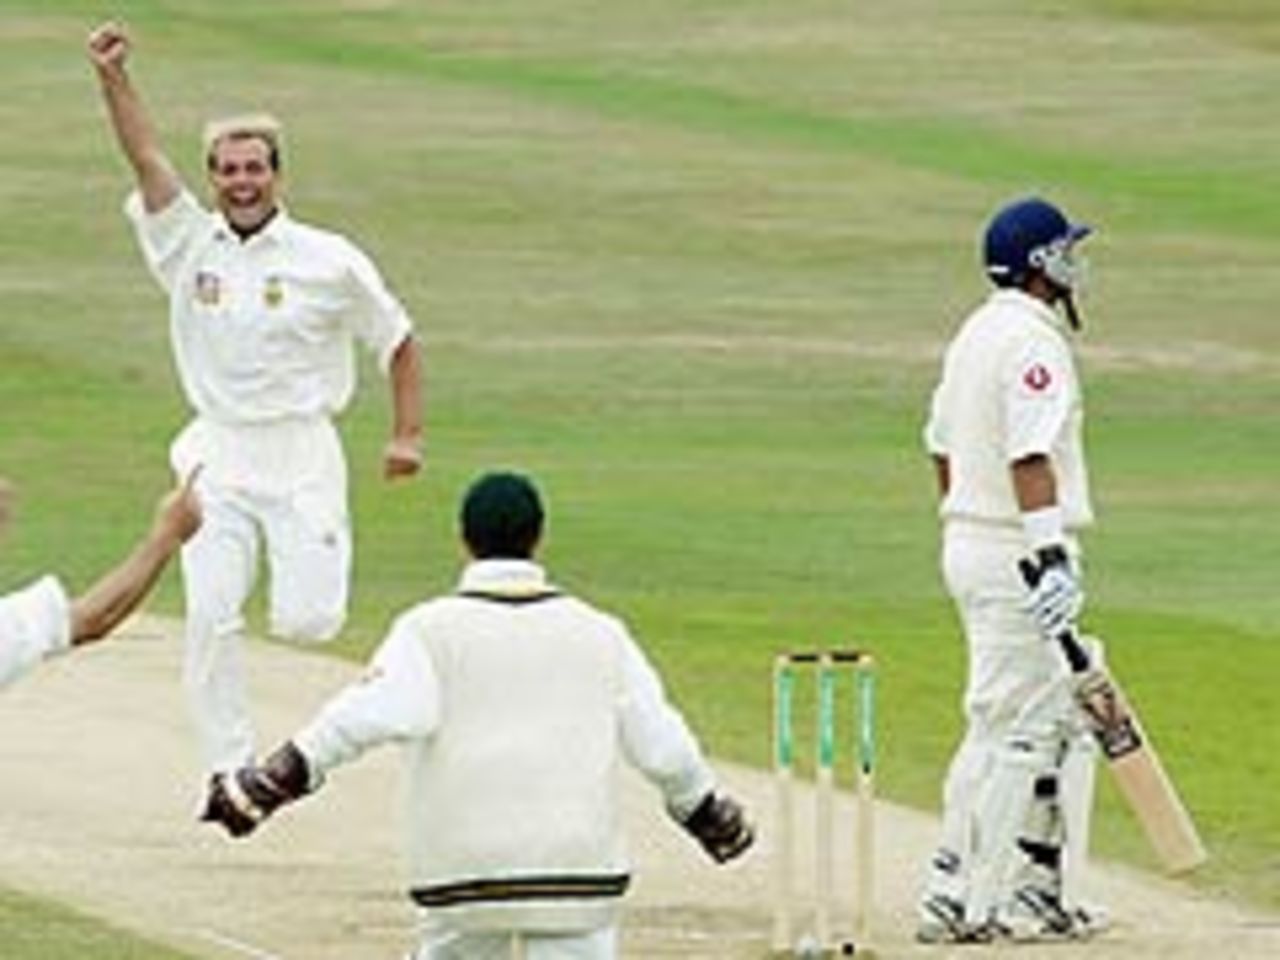 Jacques Kallis celebrates, England v South Africa, 4th Test Headingley, August 25 2003